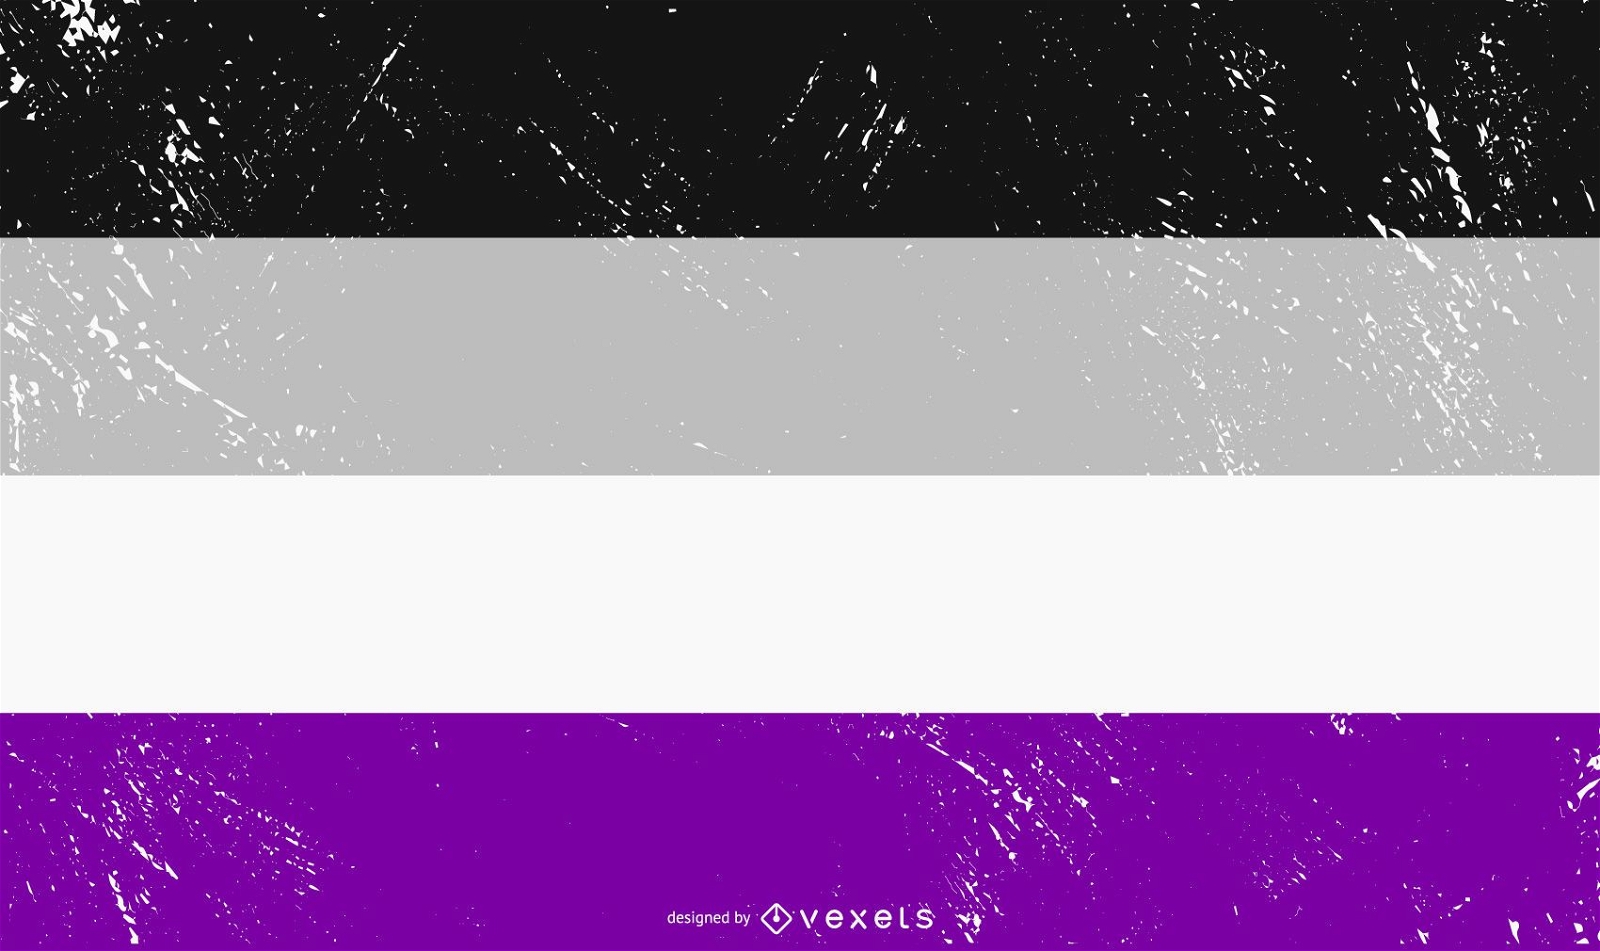 Asexual pride flag grunge